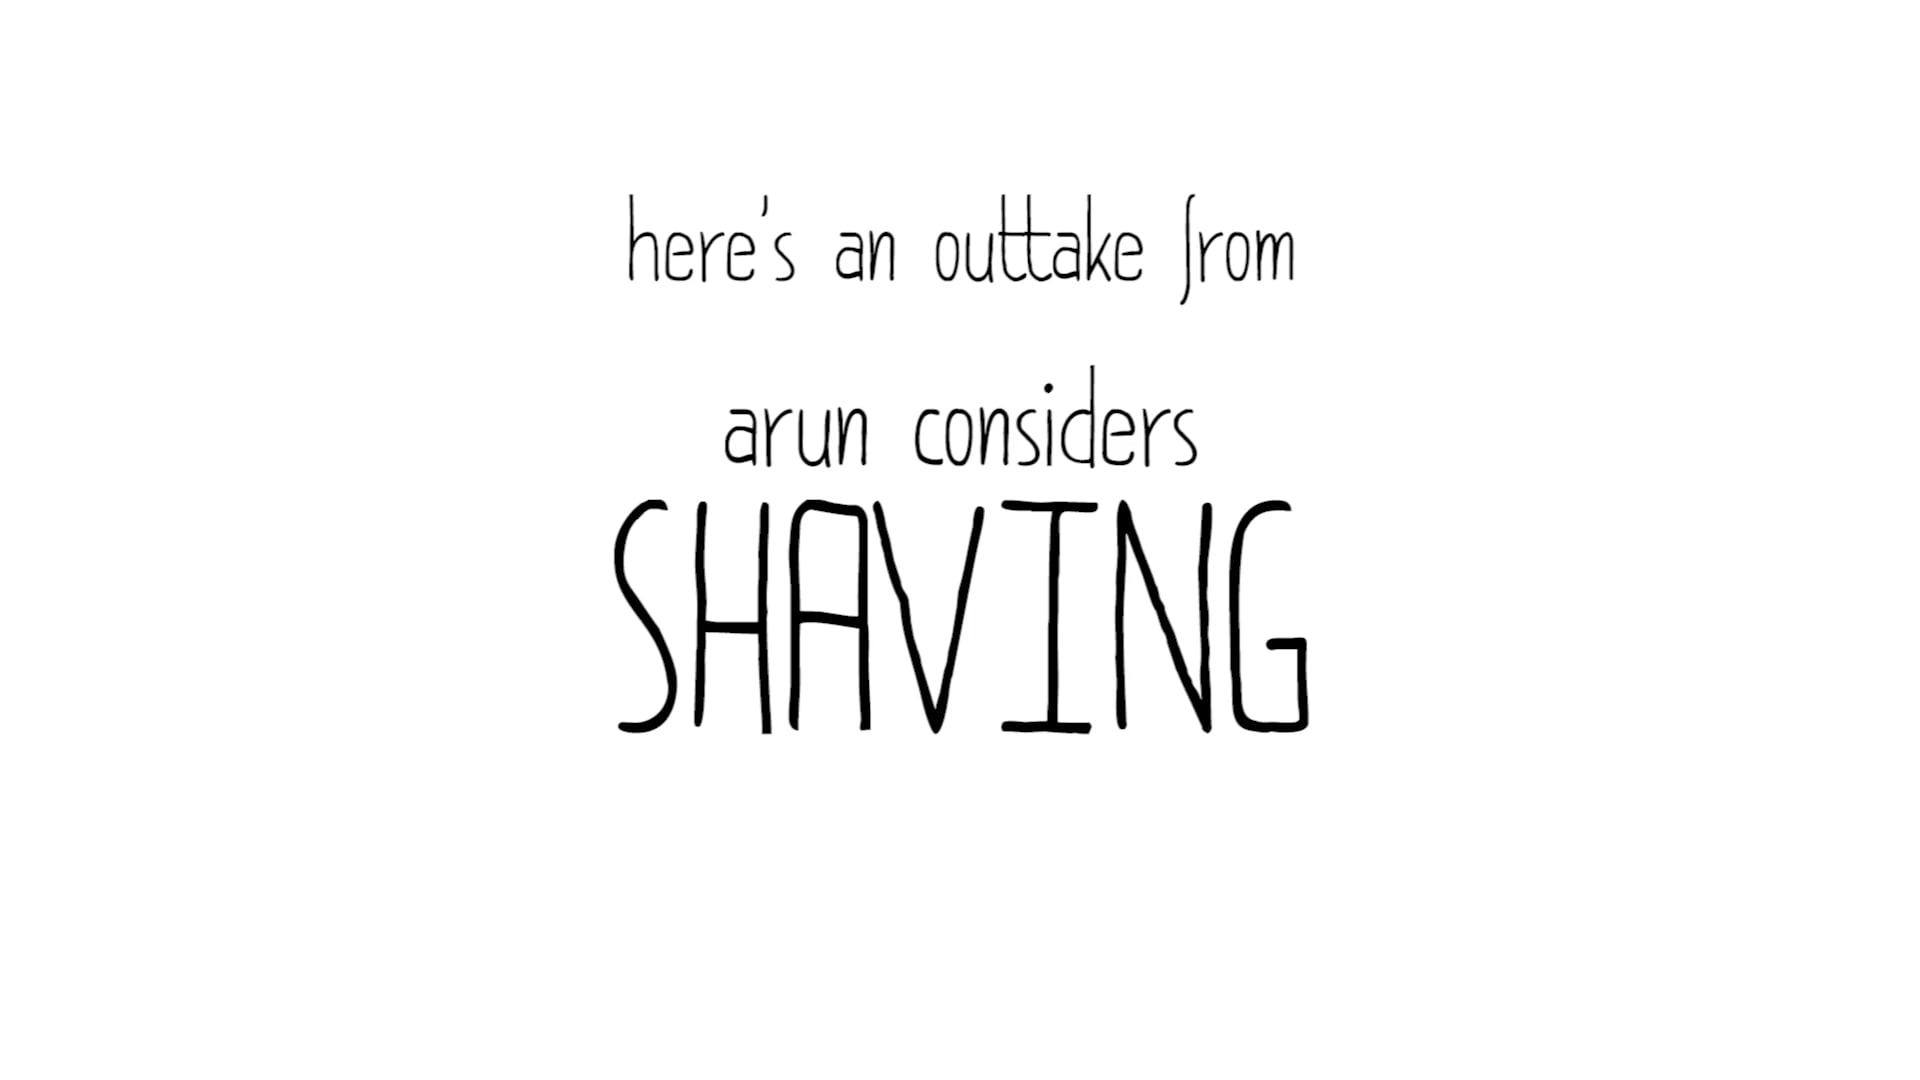 Shaving - Outtake